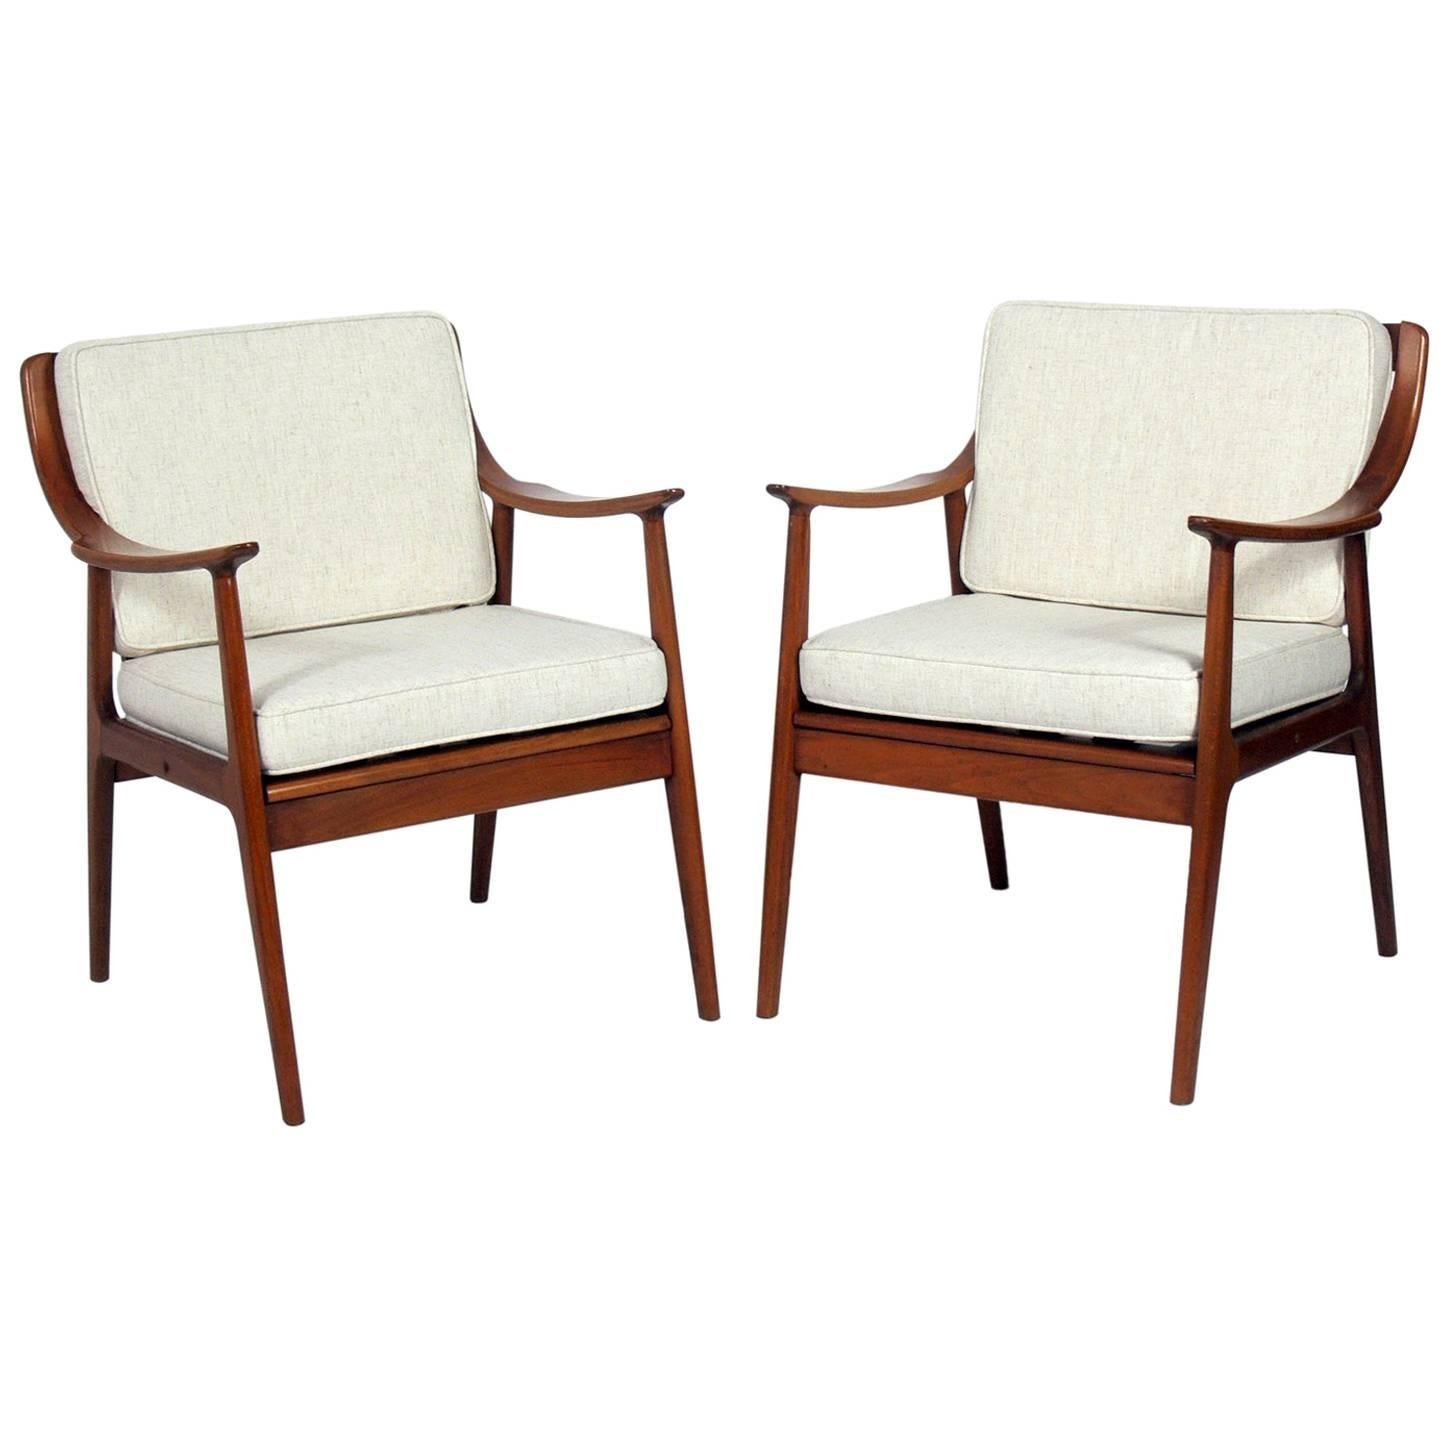 Pair of Danish Modern Lounge Chairs Attributed to Hvidt & Molgaard Nielsen